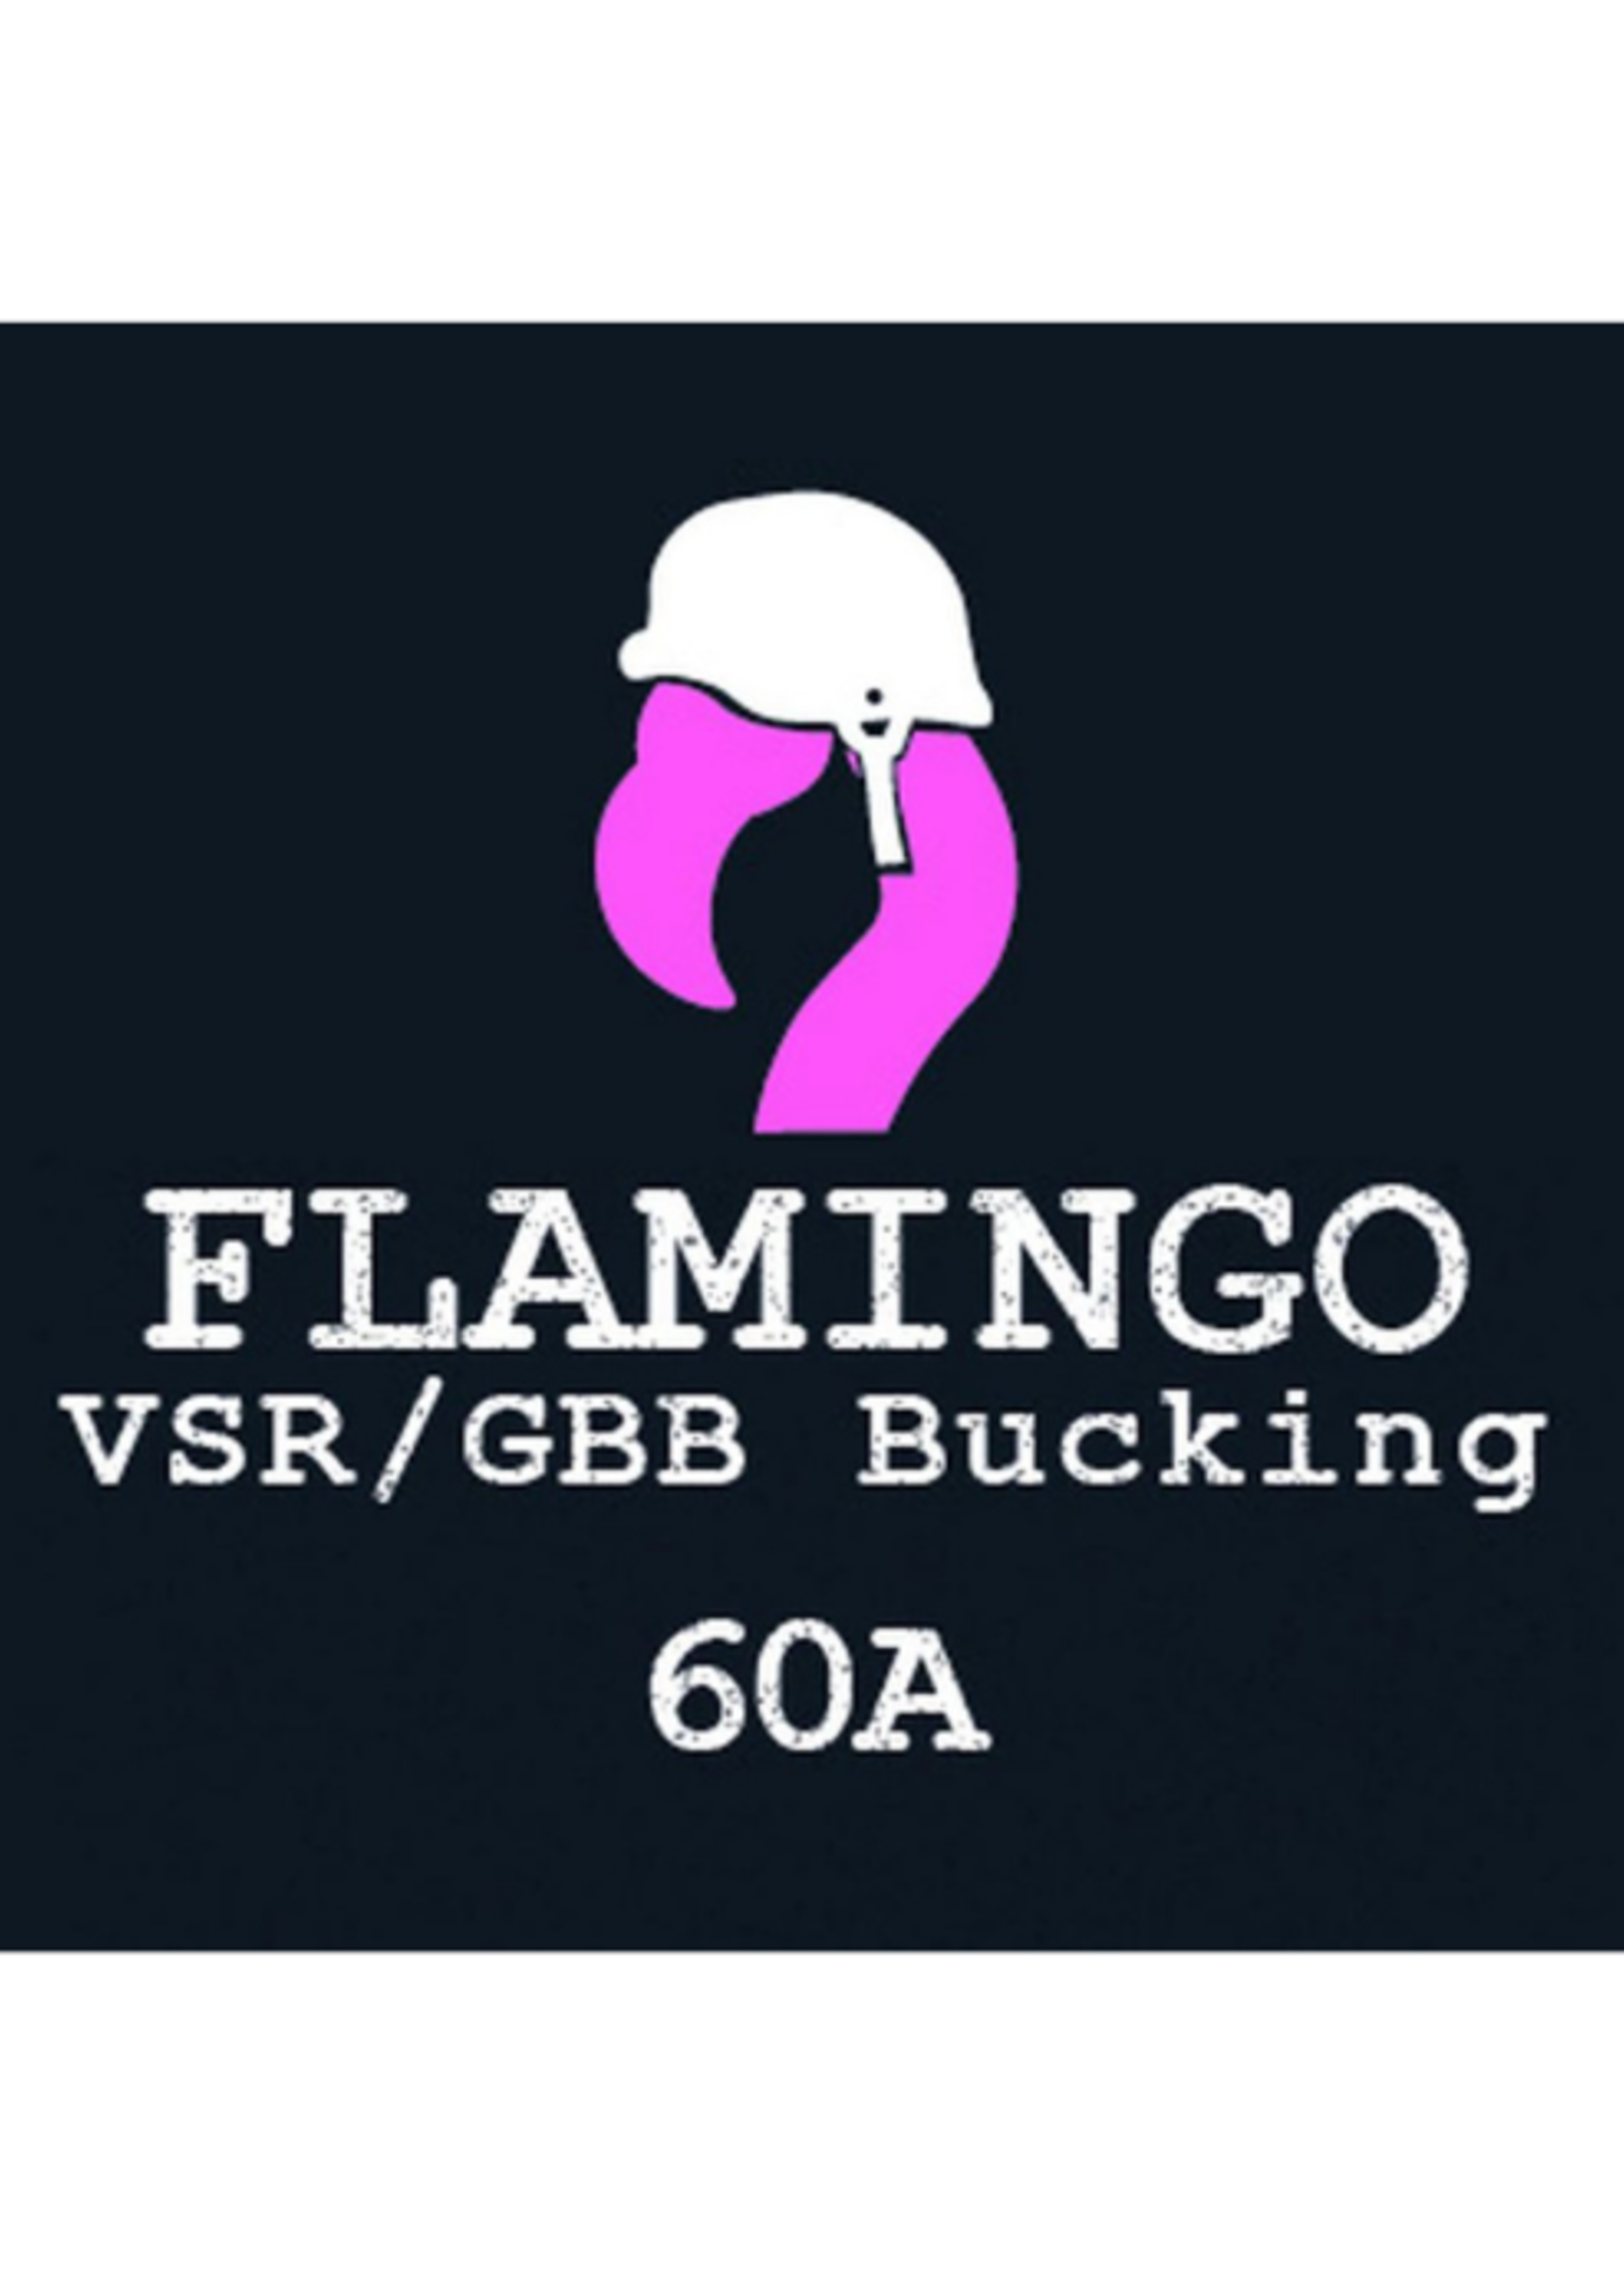 VSR/GBB Flamingo Bucking 60 Degree - 2021 version